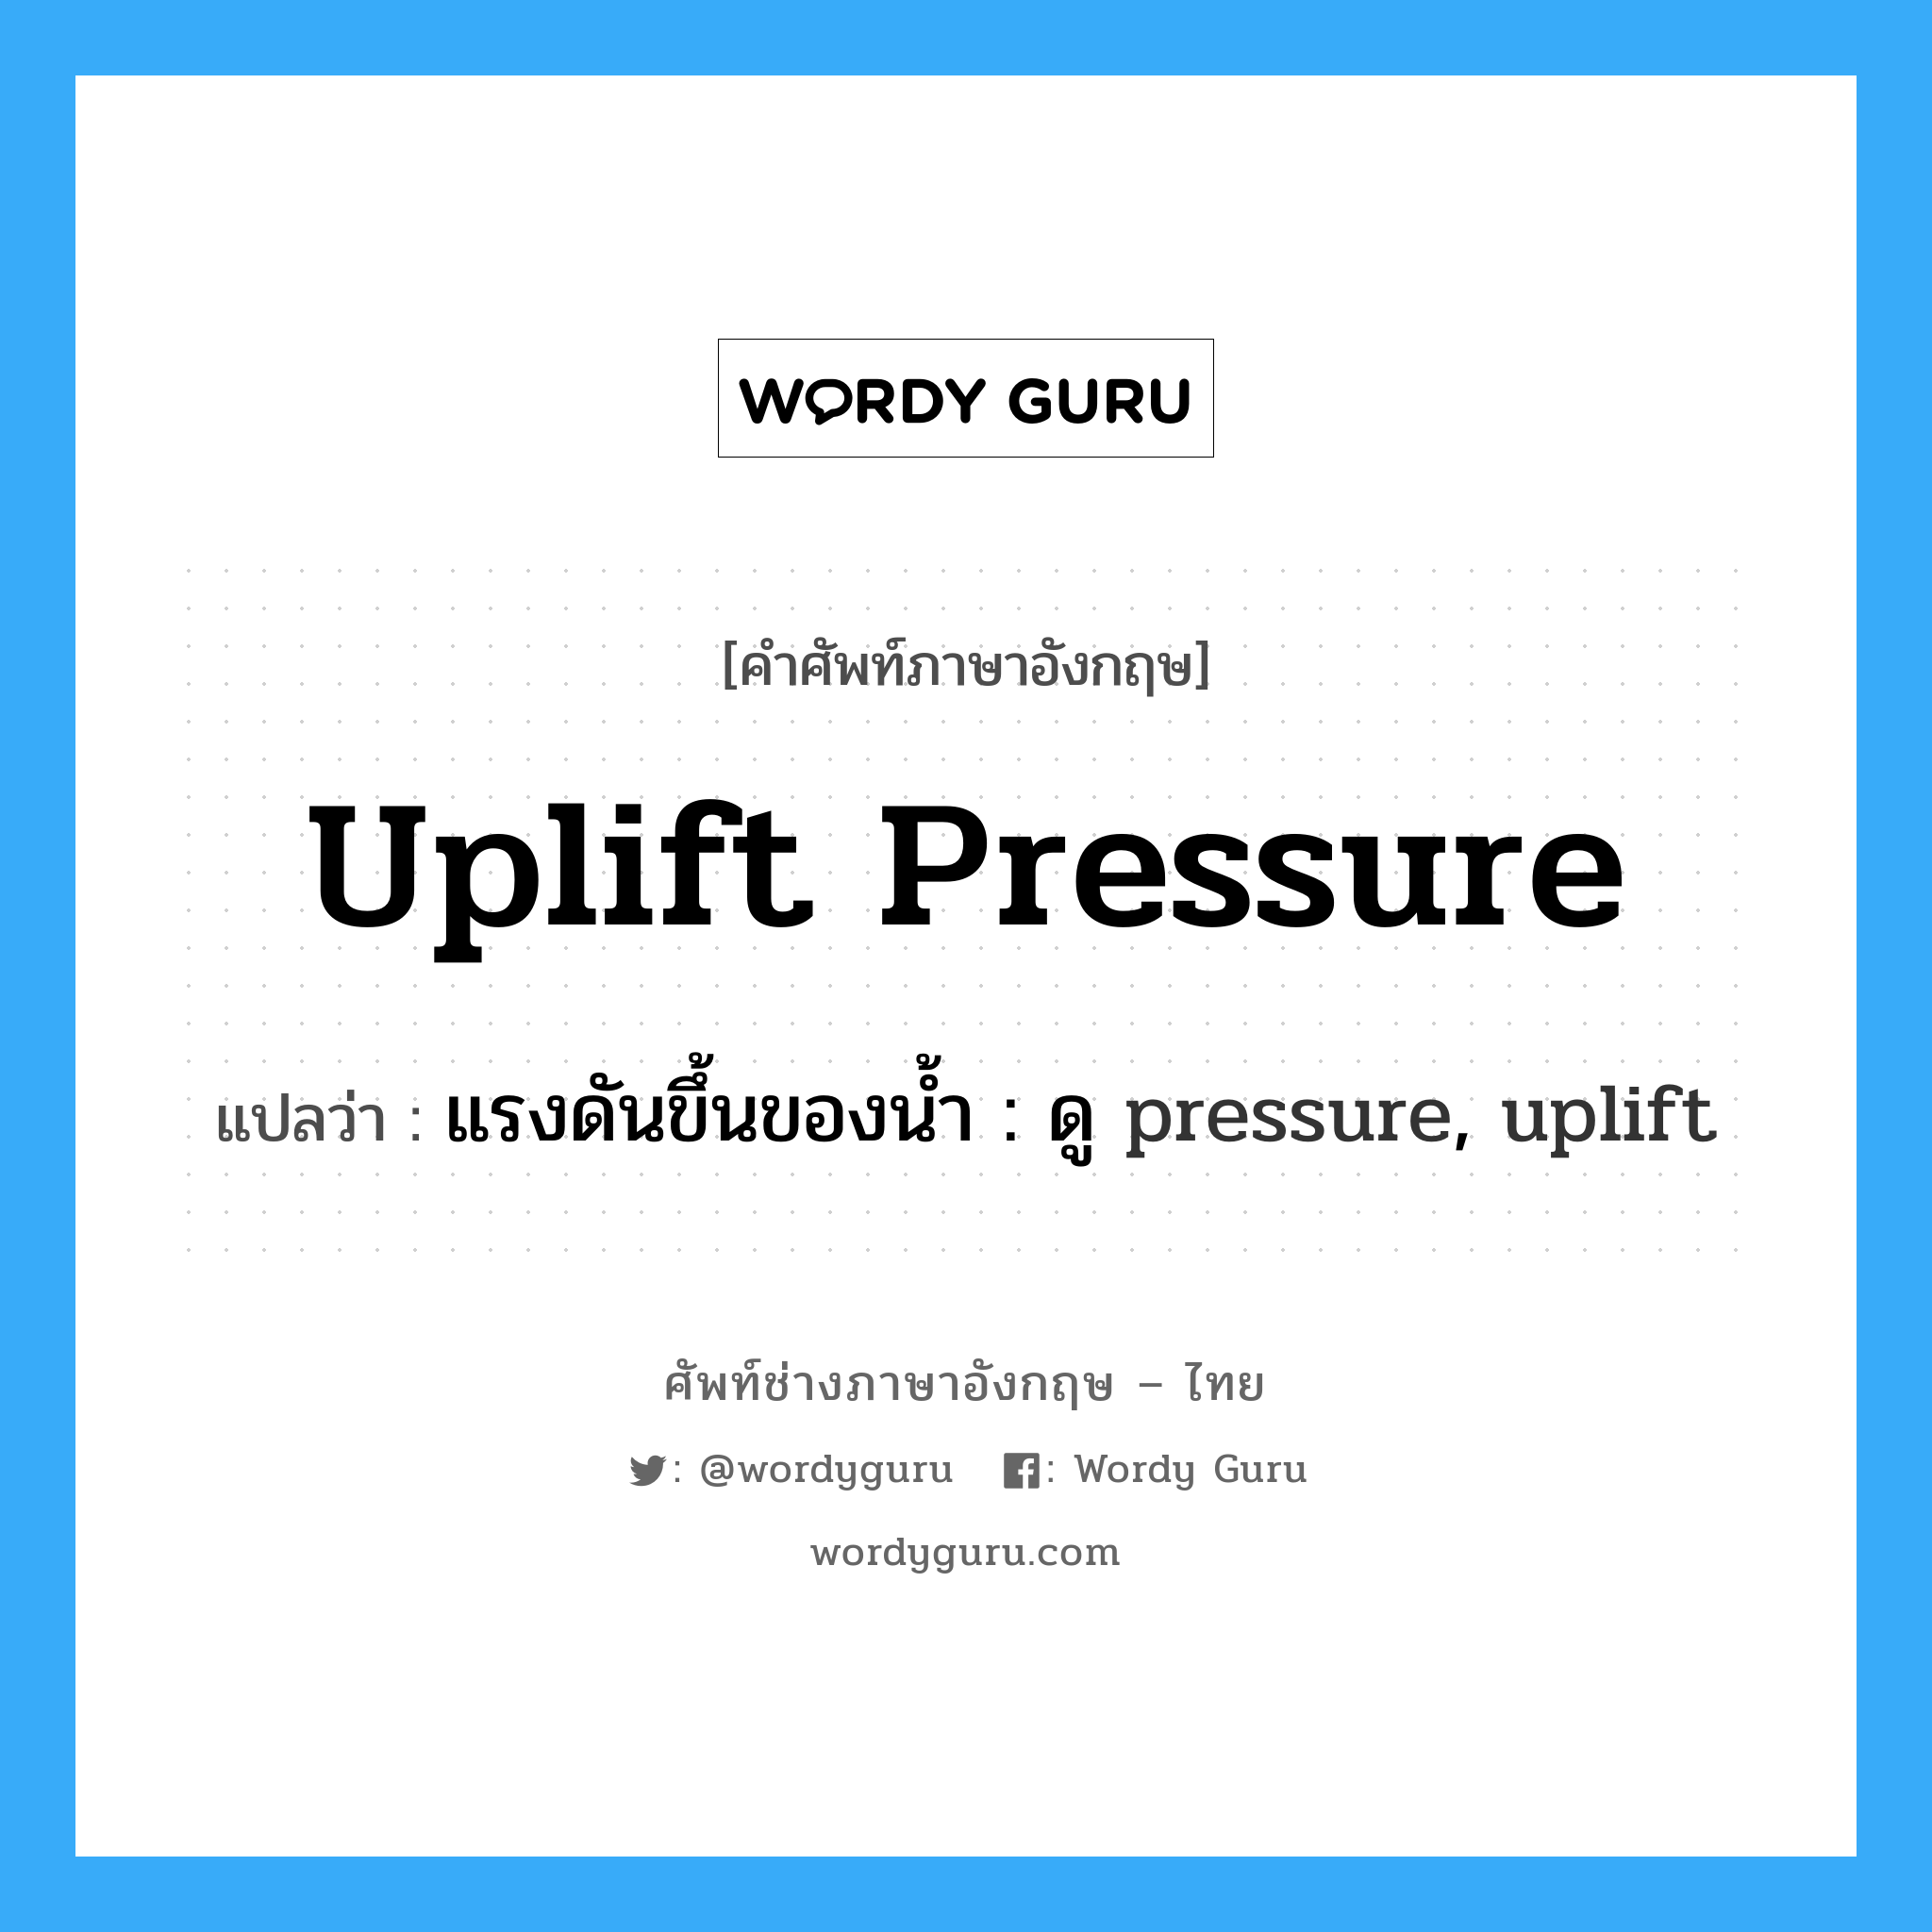 uplift pressure แปลว่า?, คำศัพท์ช่างภาษาอังกฤษ - ไทย uplift pressure คำศัพท์ภาษาอังกฤษ uplift pressure แปลว่า แรงดันขึ้นของน้ำ : ดู pressure, uplift